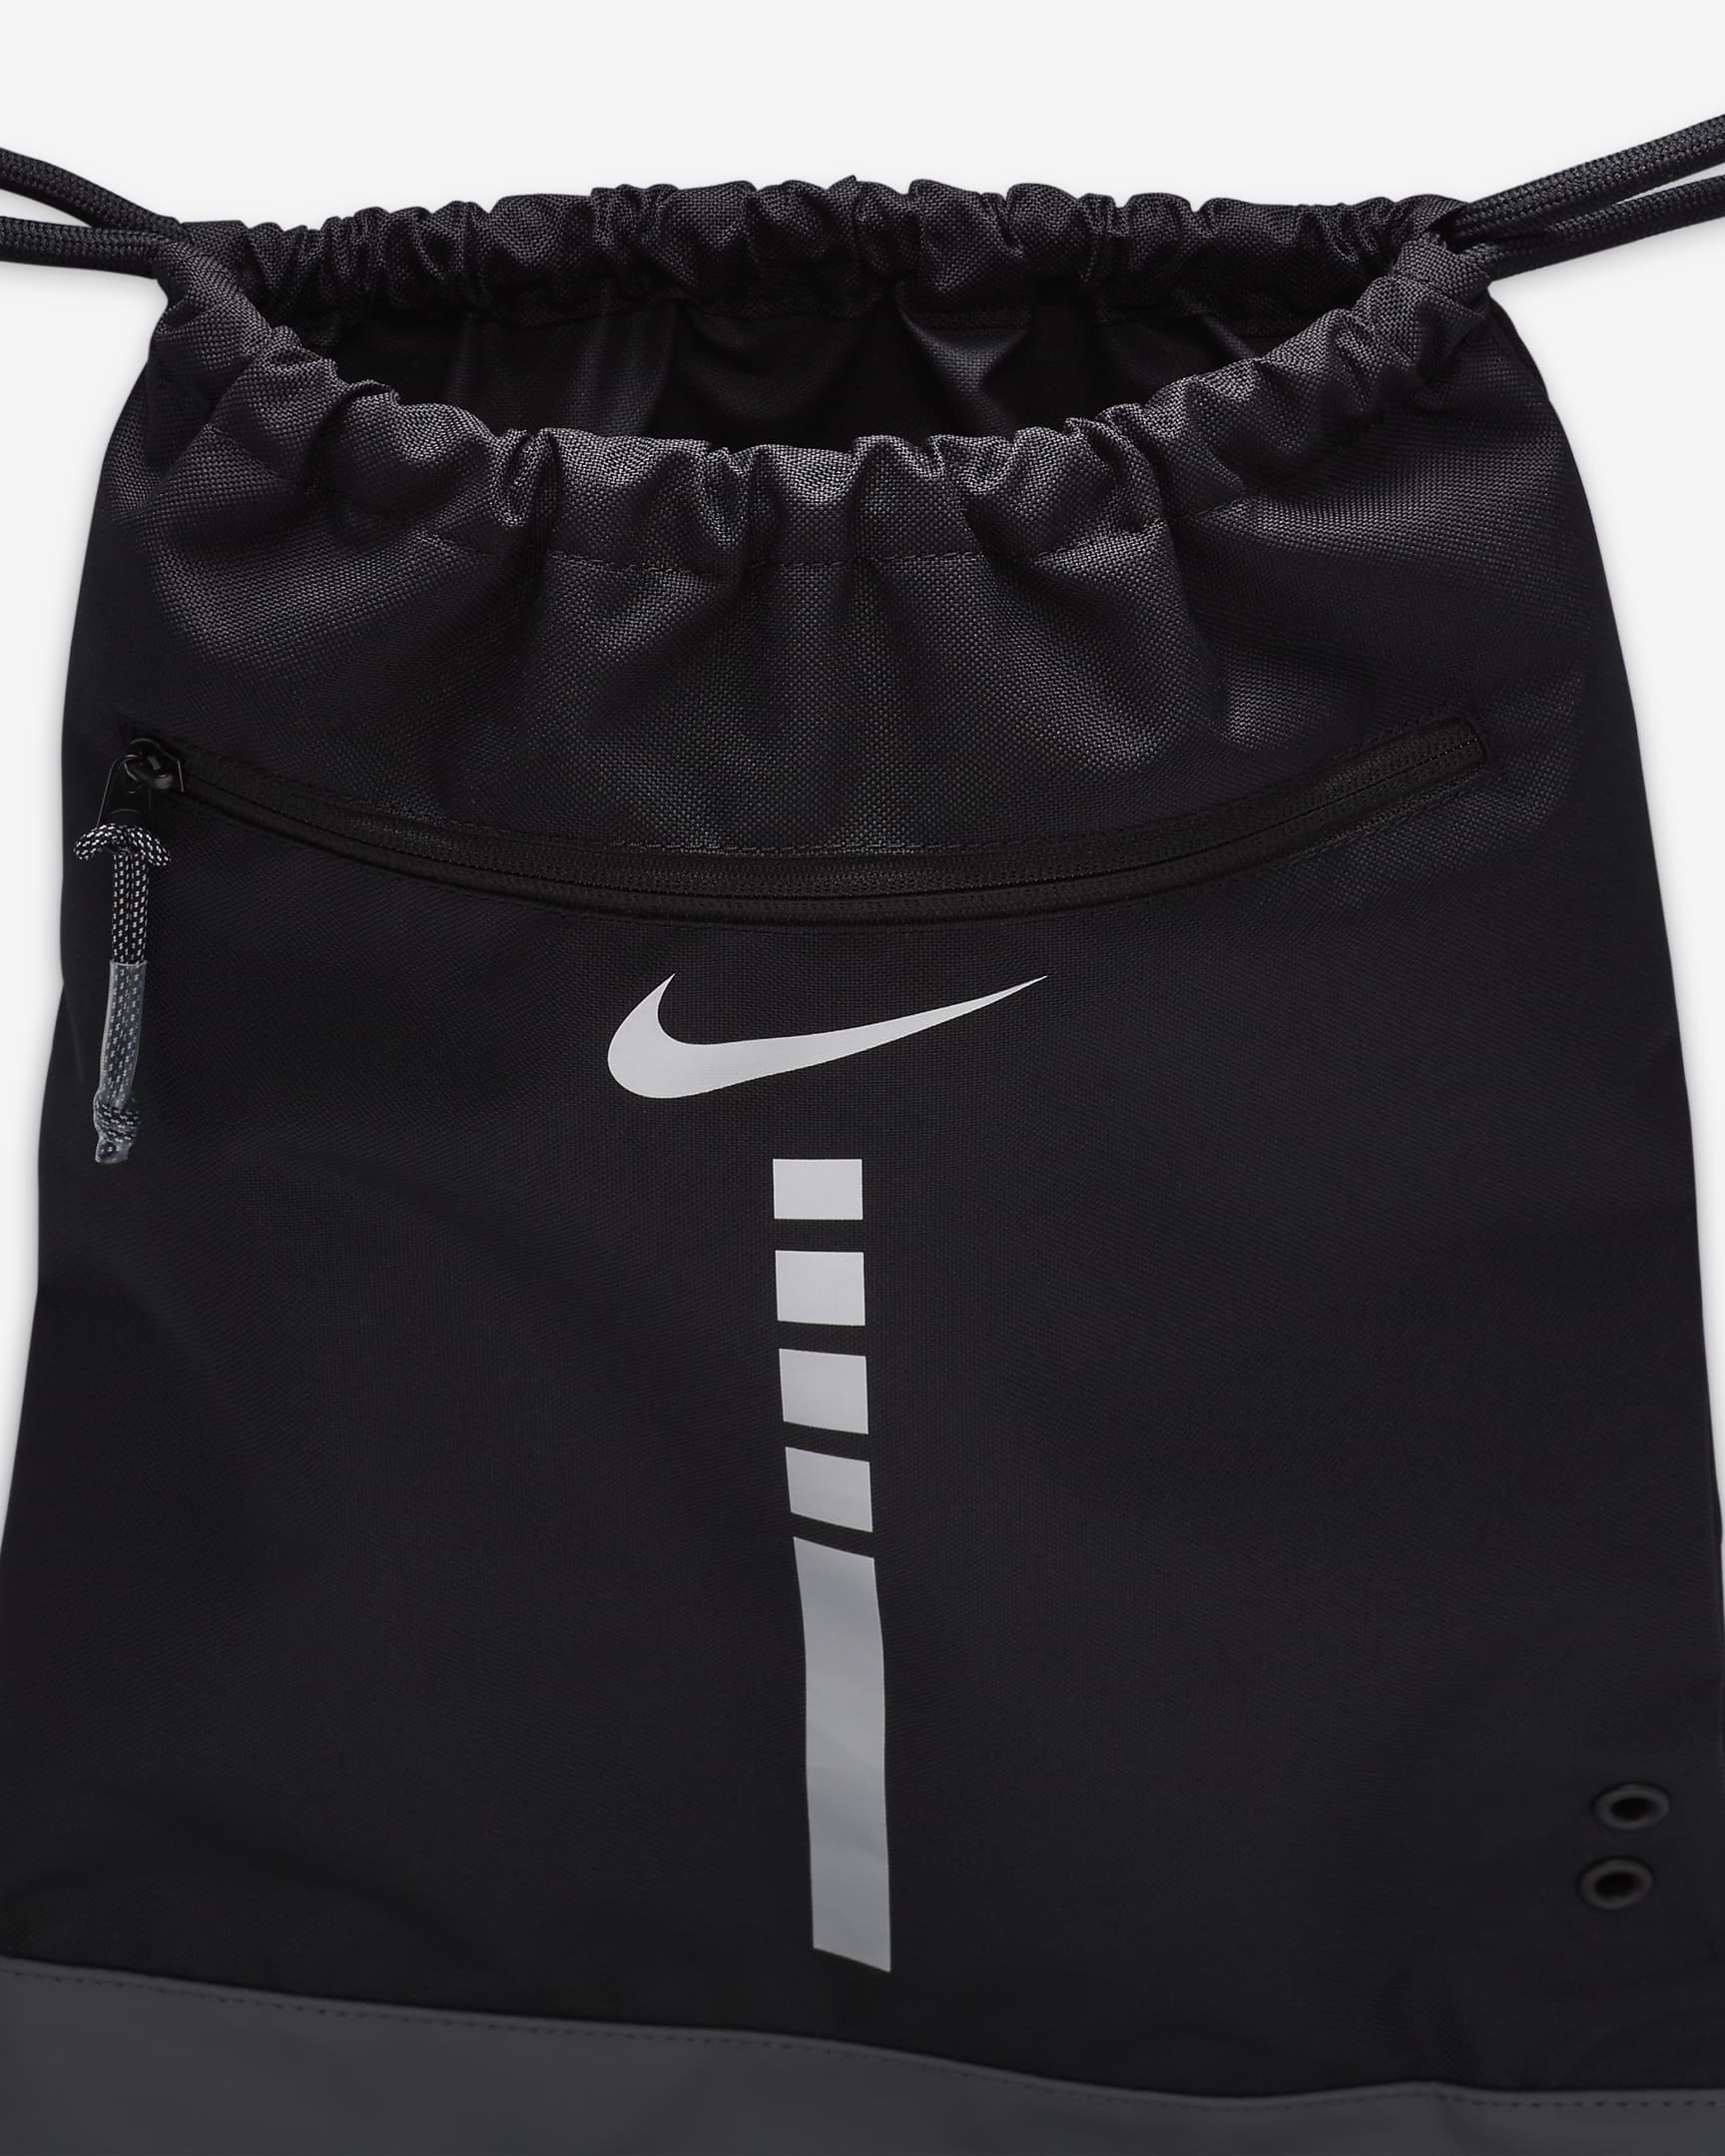 Nike Hoops Elite Drawstring Bag (17L). Nike.com